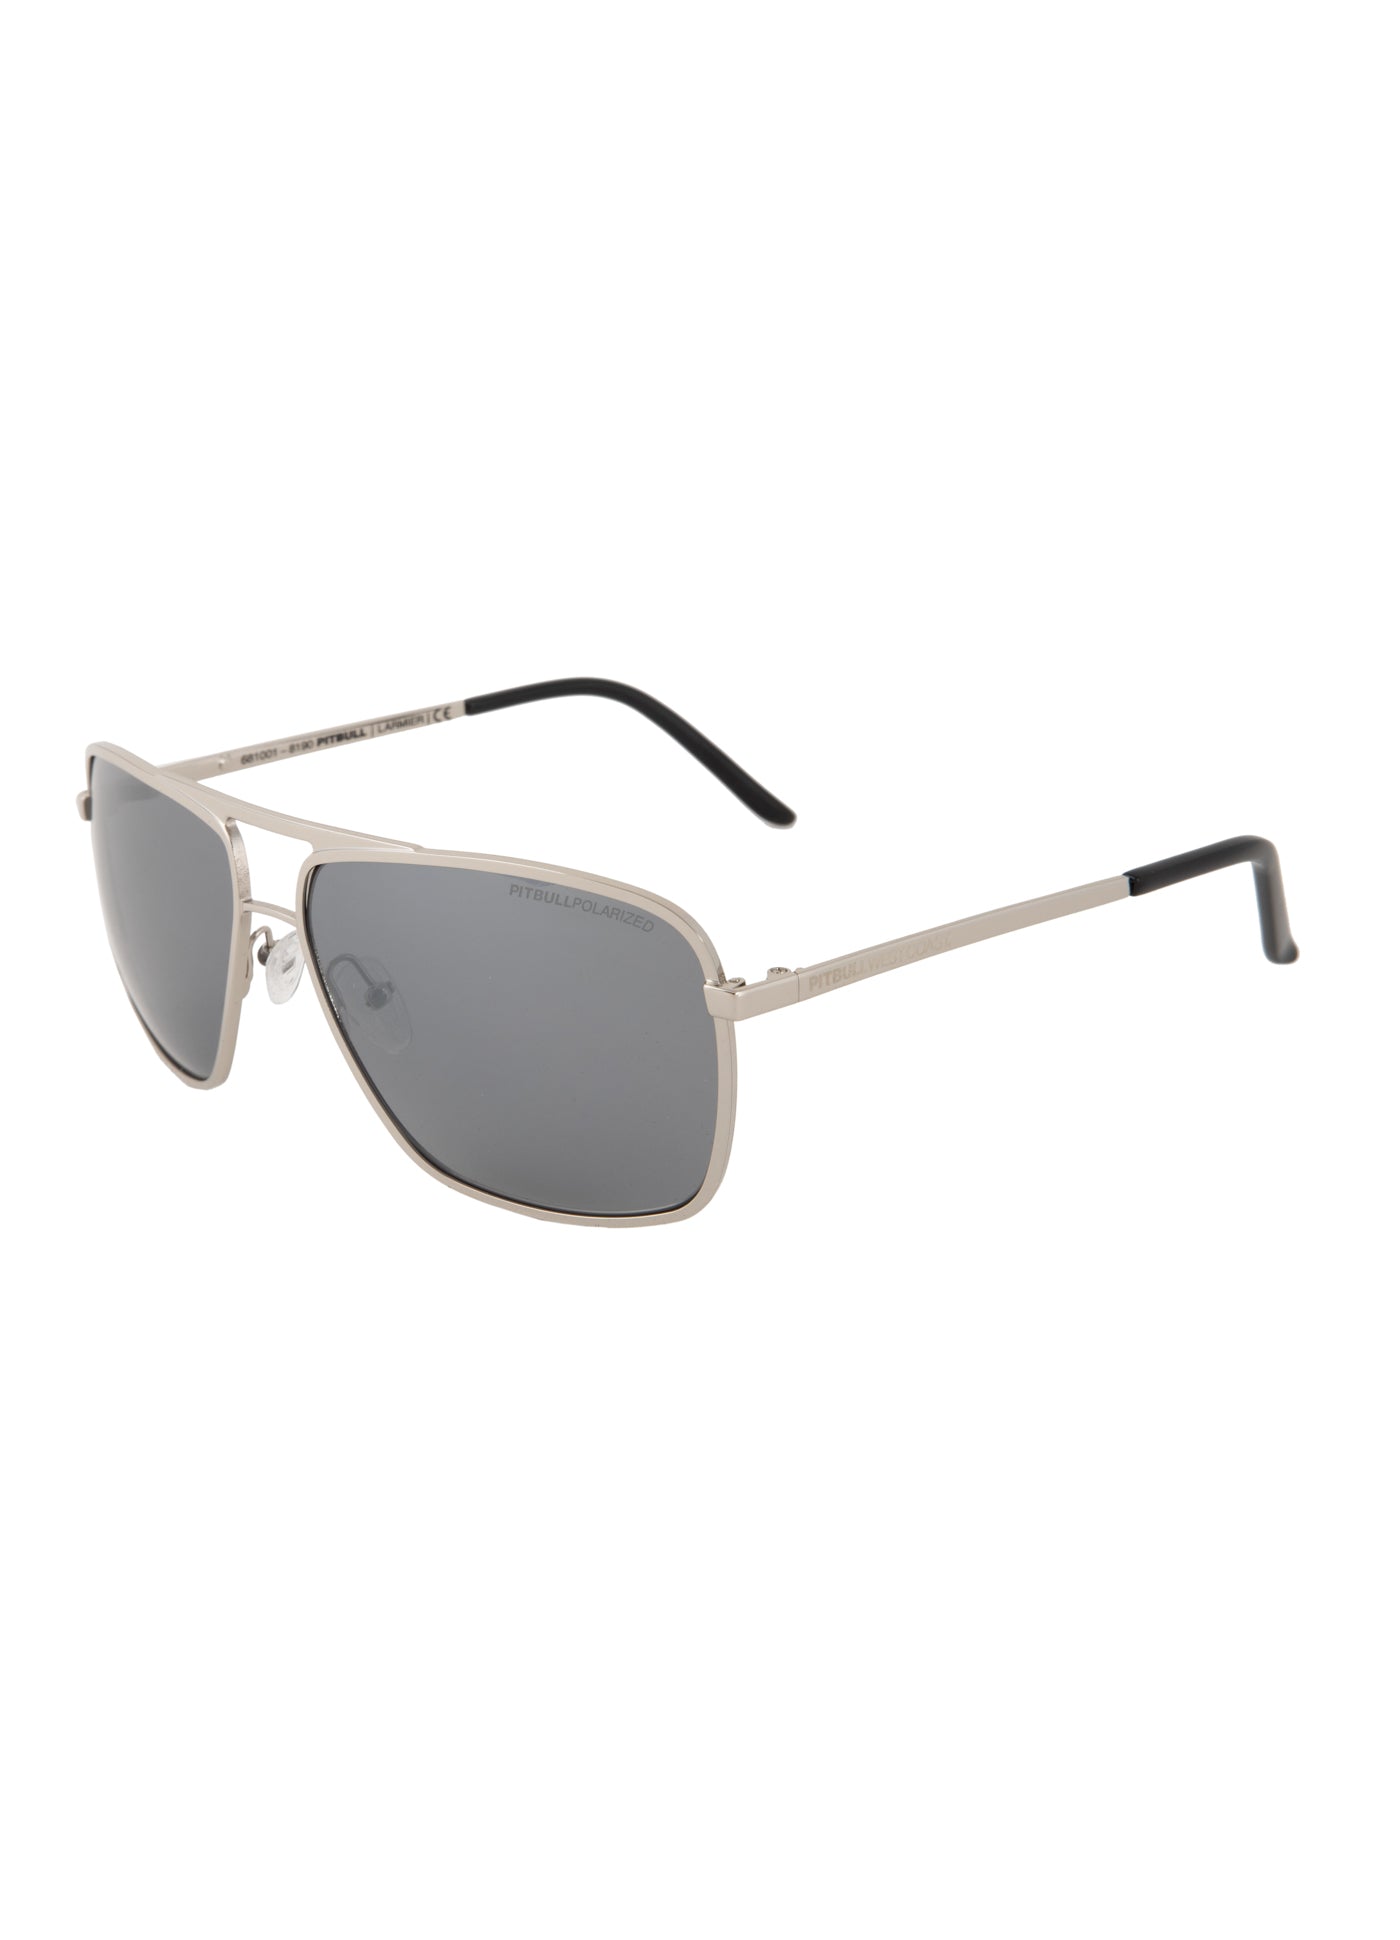 Sunglasses LARMIER Silver/Black - Pitbull West Coast  UK Store